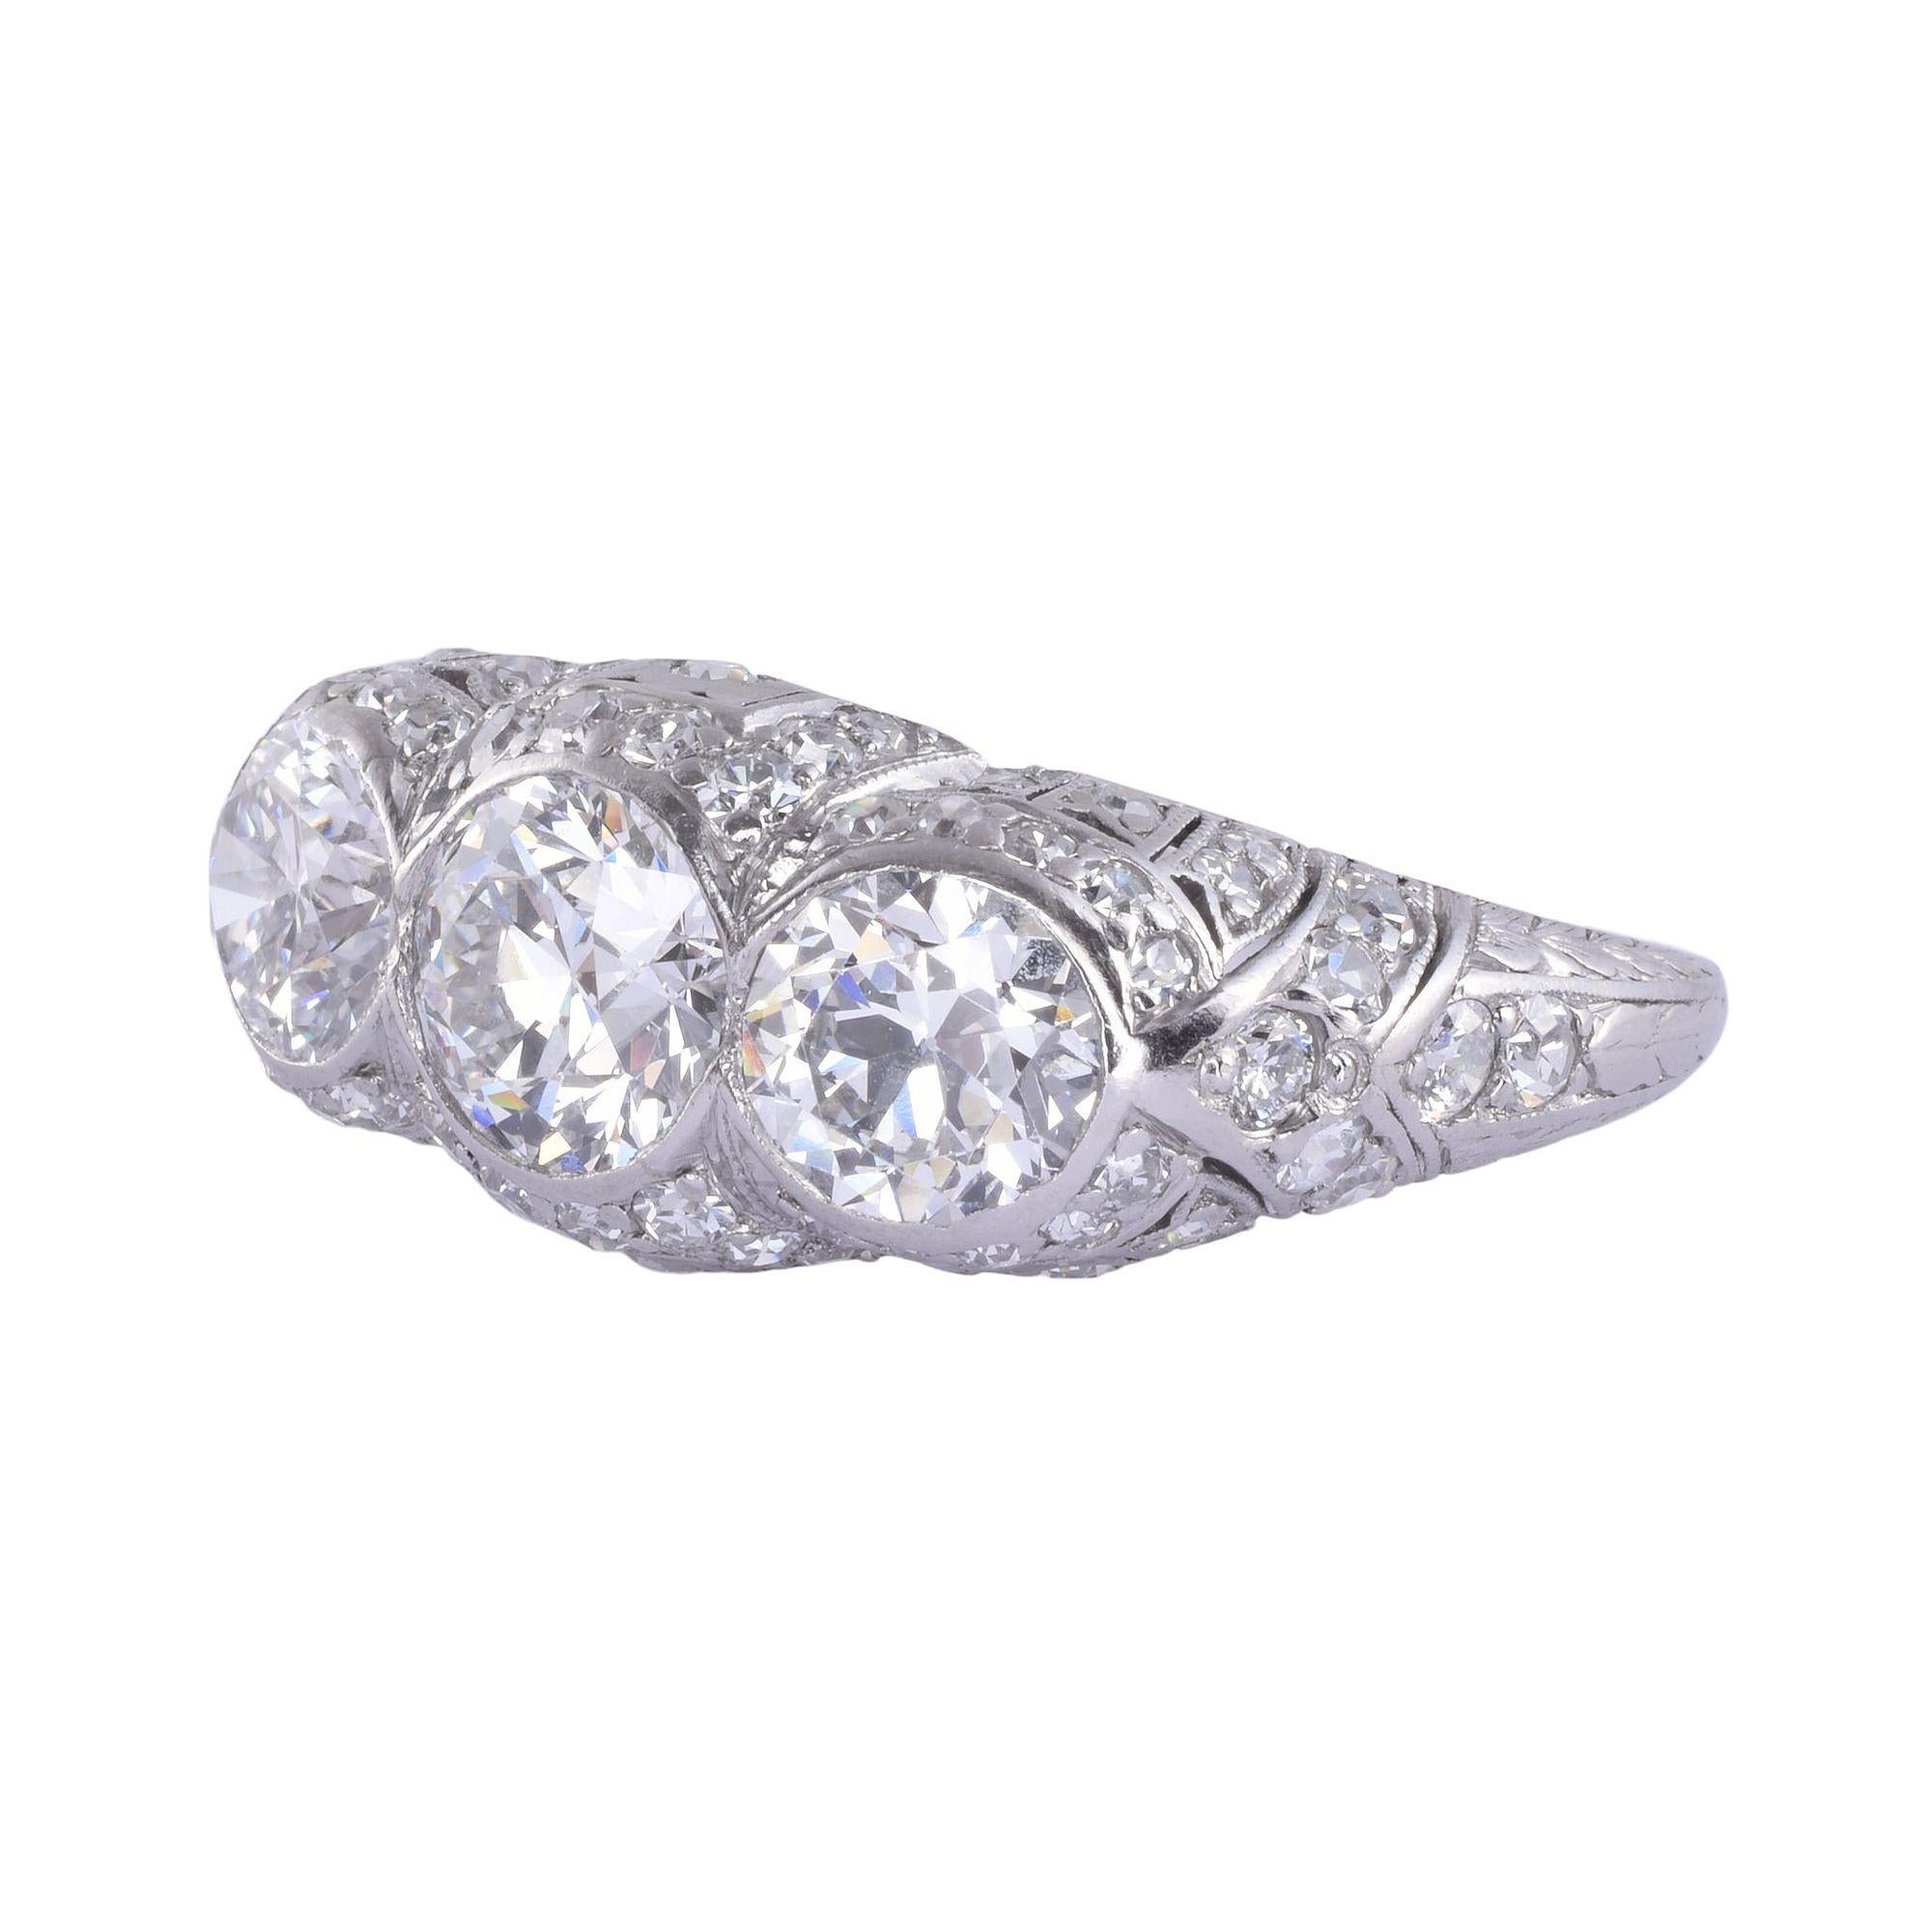 Vintage Art Deco three center diamond platinum ring, circa 1930. This Art Deco platinum ring features three bezel set center diamonds, including a .95 carat VS1 G, a .66 carat VS2 H, and a .68 carat VS2 H. There are also 68 accent diamonds including